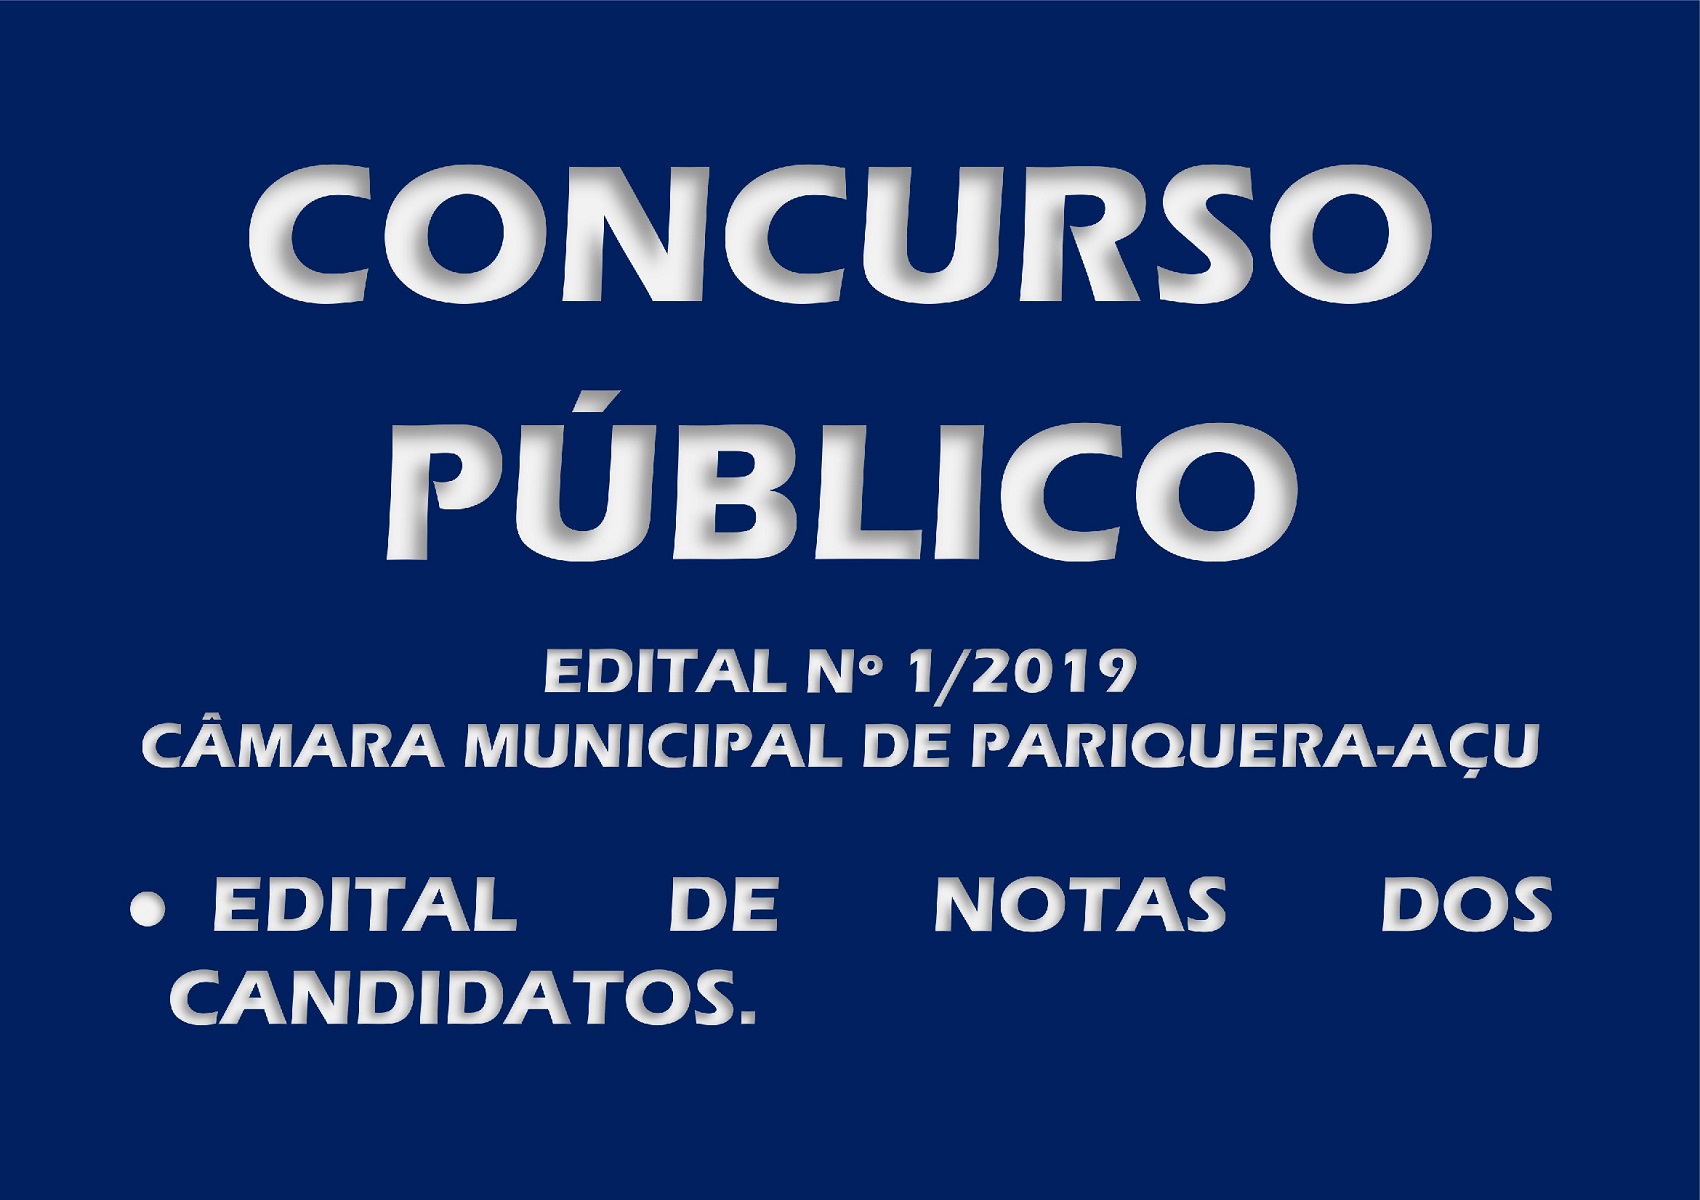 Edital de Notas do Concurso Público nº 1/2019